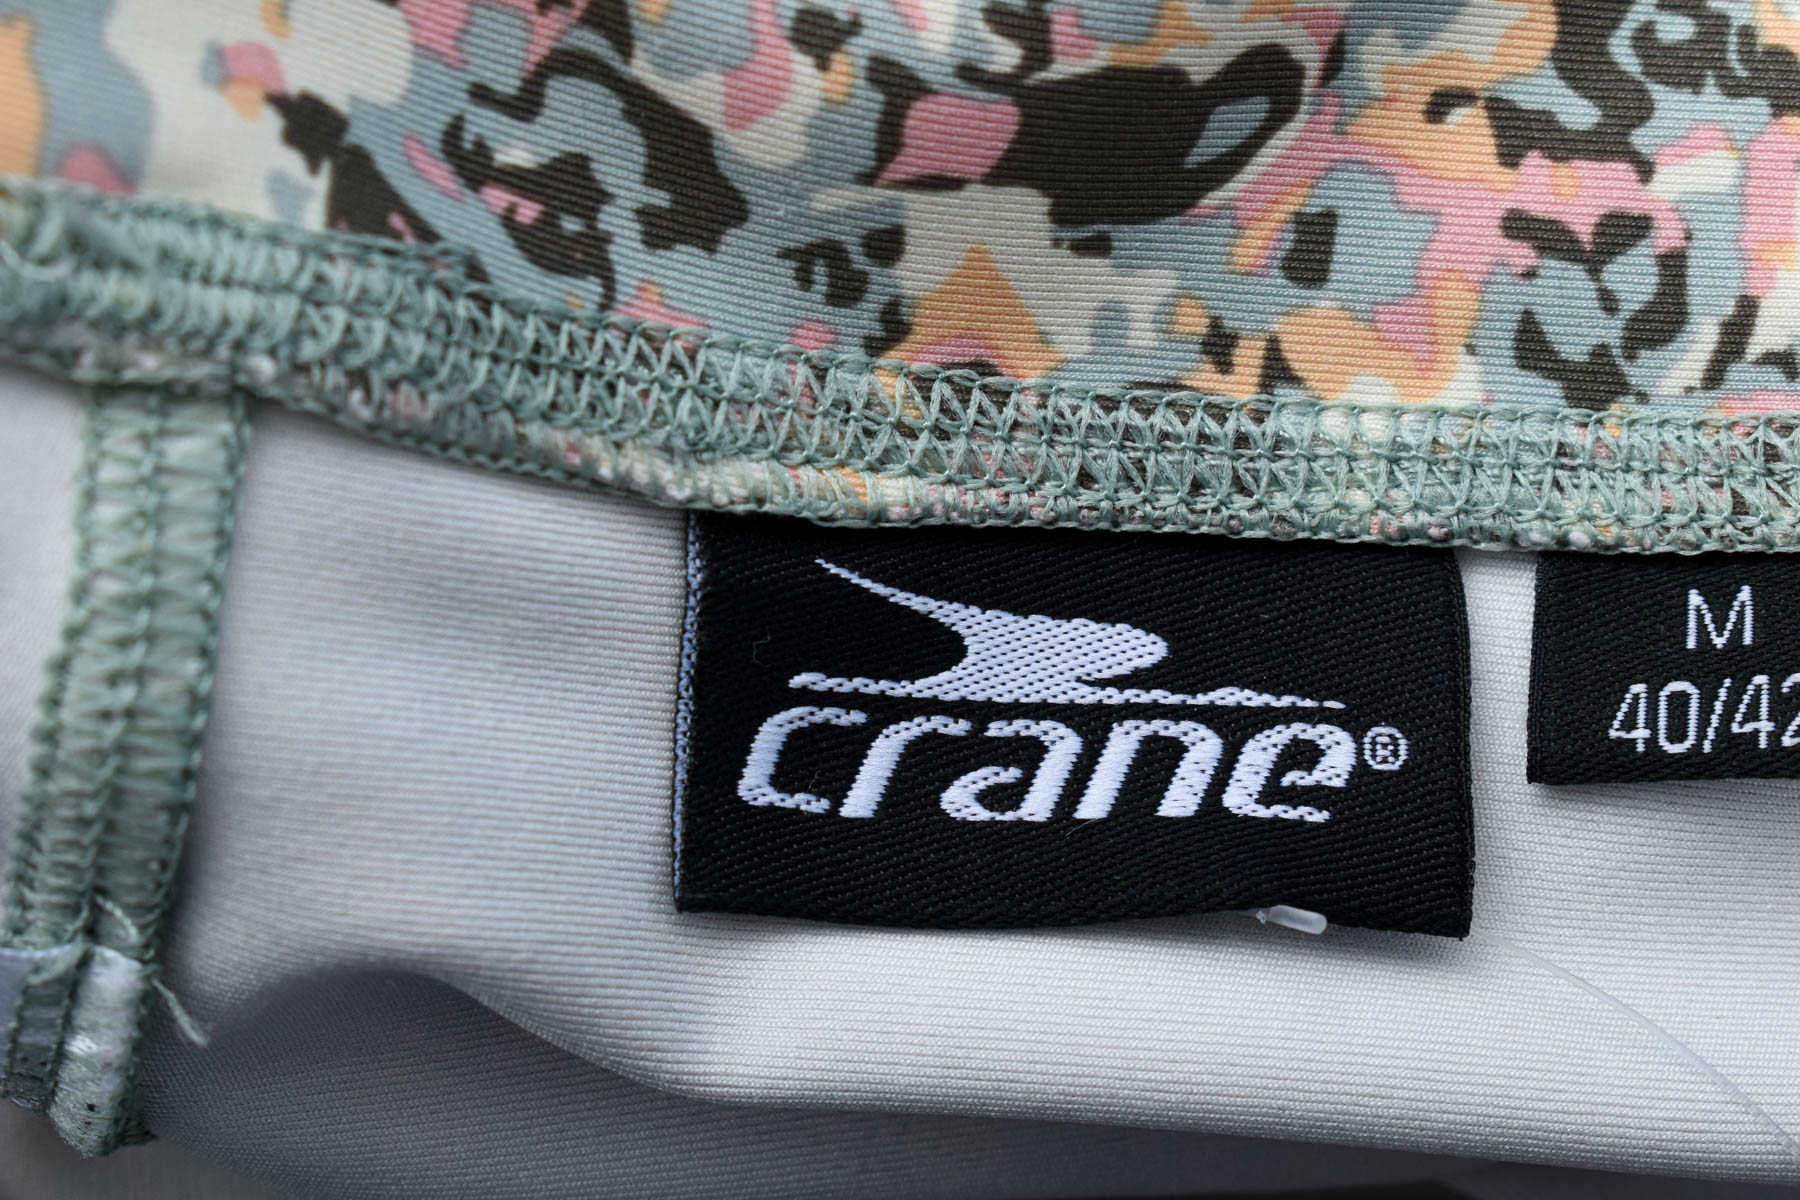 Leggings - Crane - 2